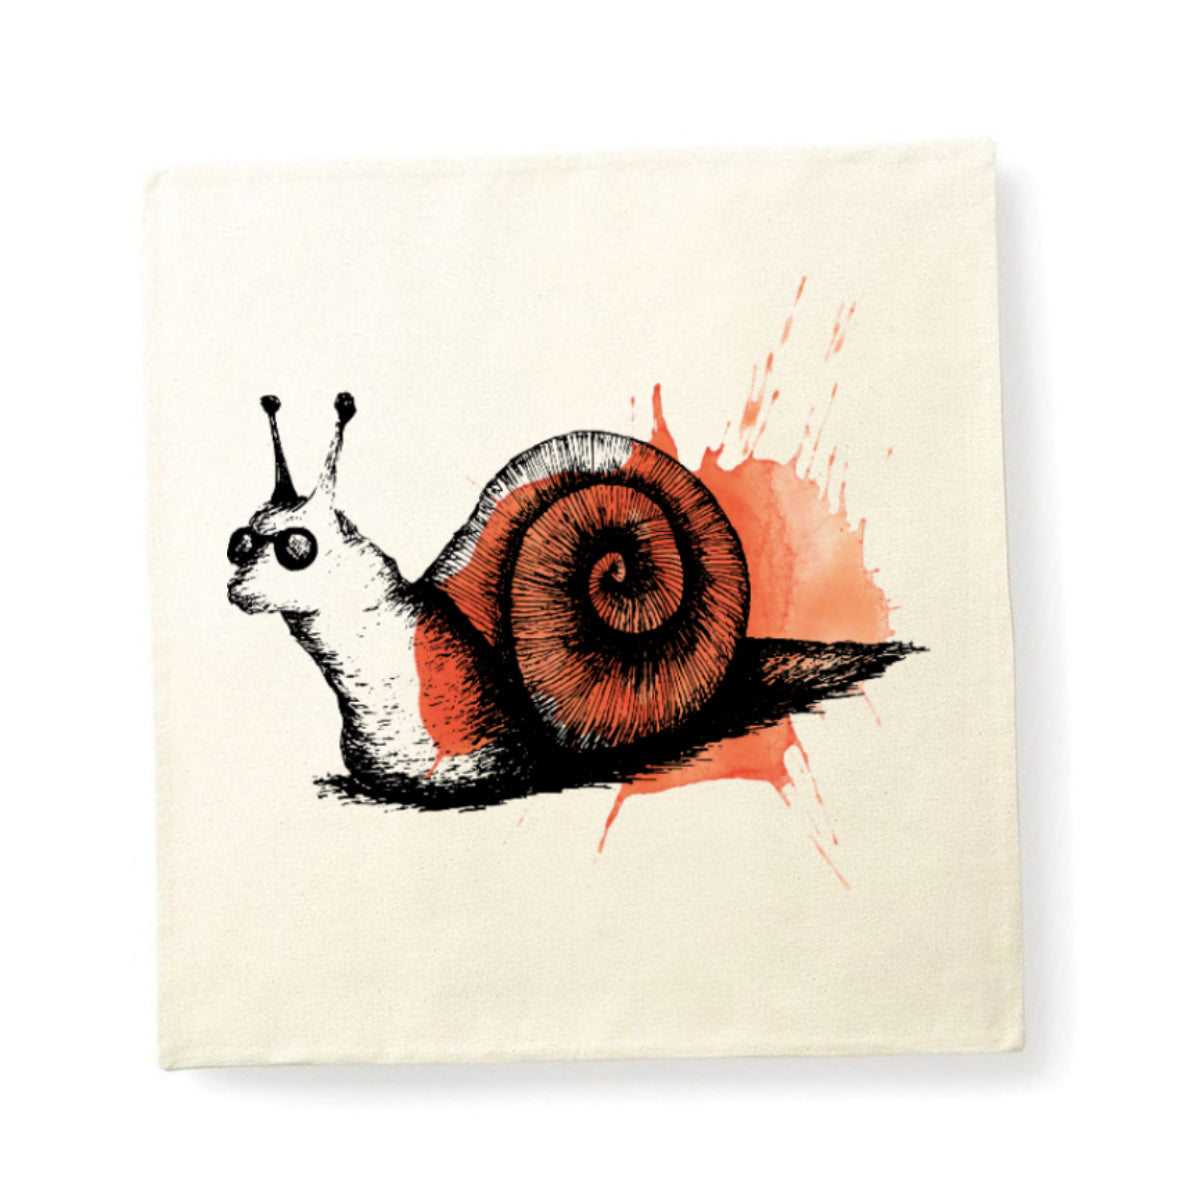 Cushion cover, snail maud by Gill Pollitt